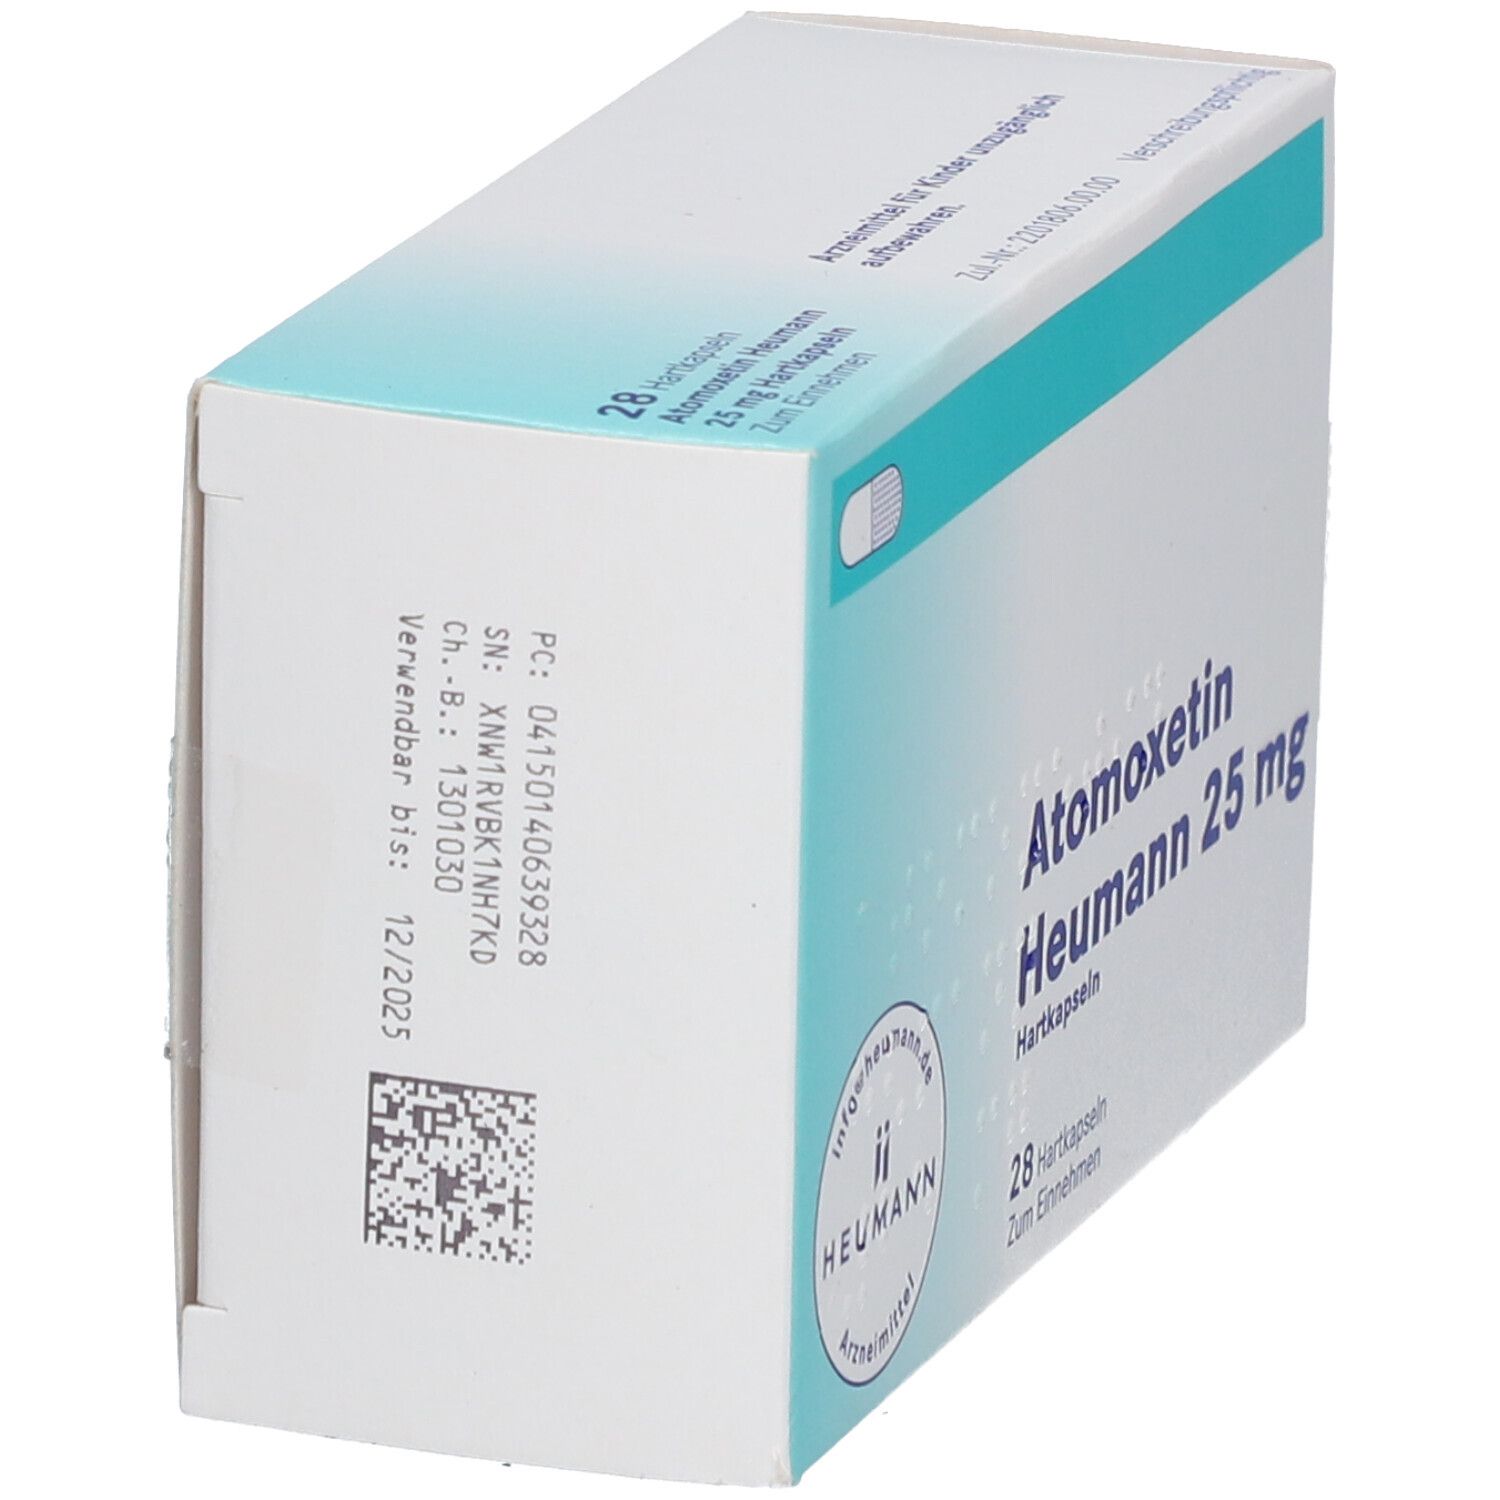 Atomoxetin Heumann 25 mg